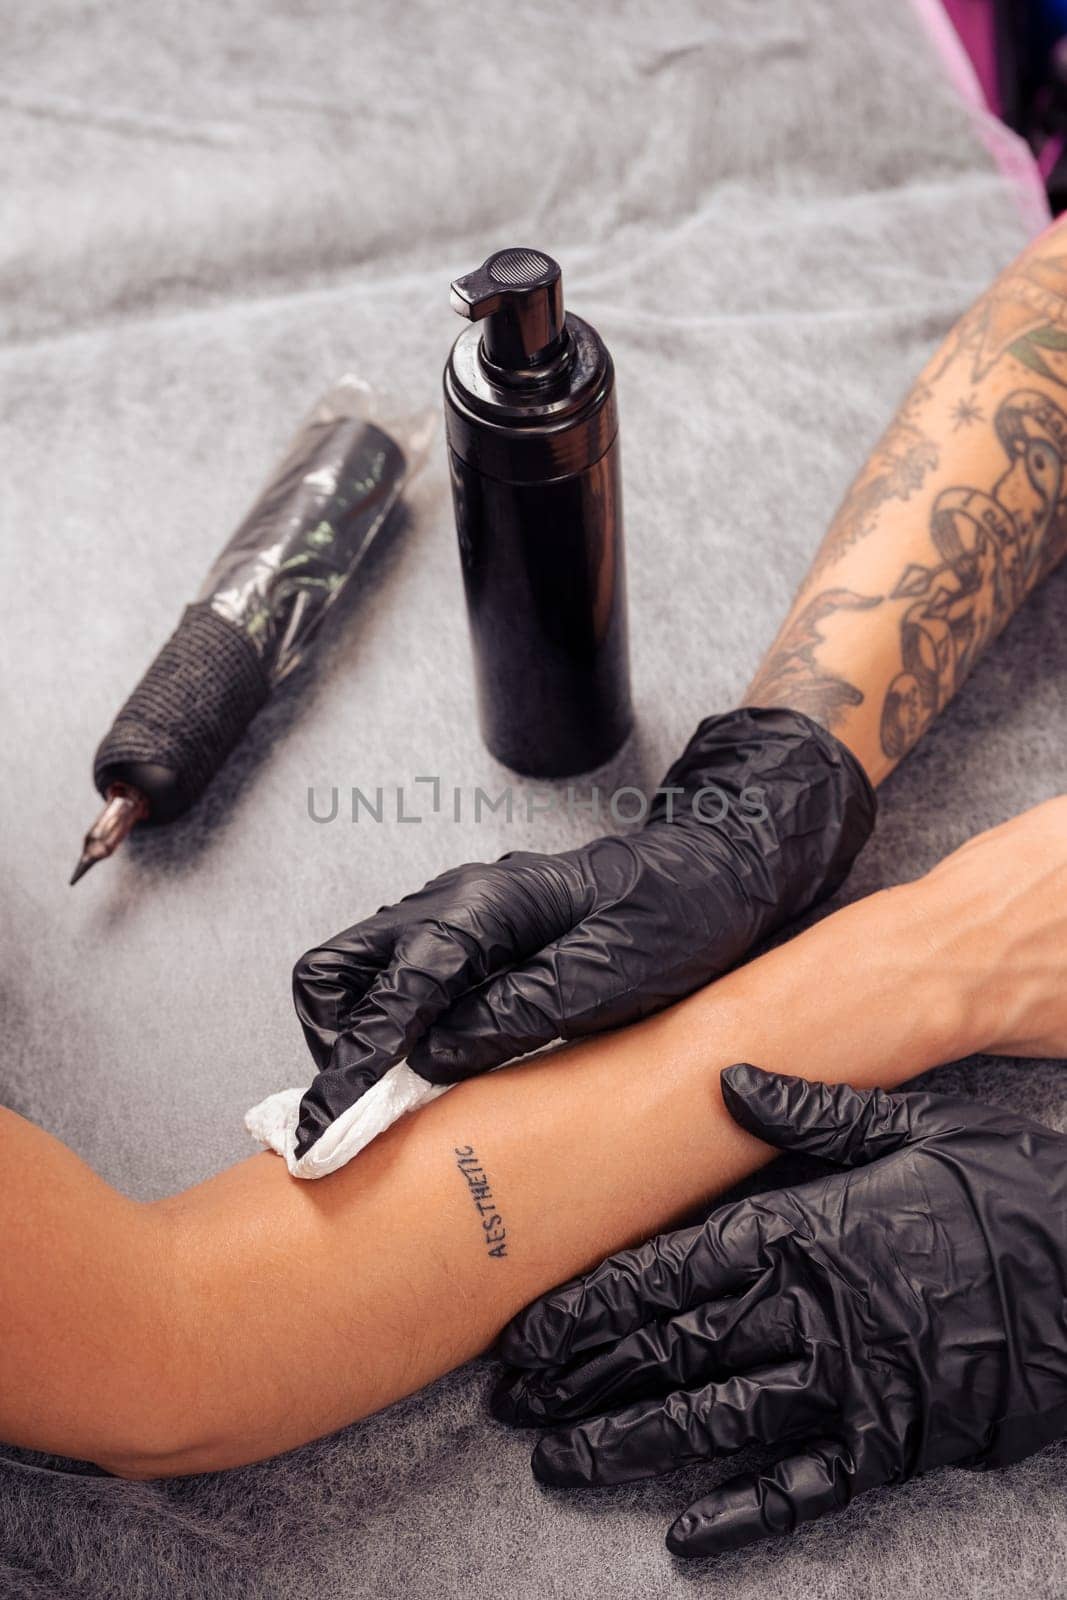 Tattoo artist cleansing tattooed skin with antibacterial foam by nazarovsergey